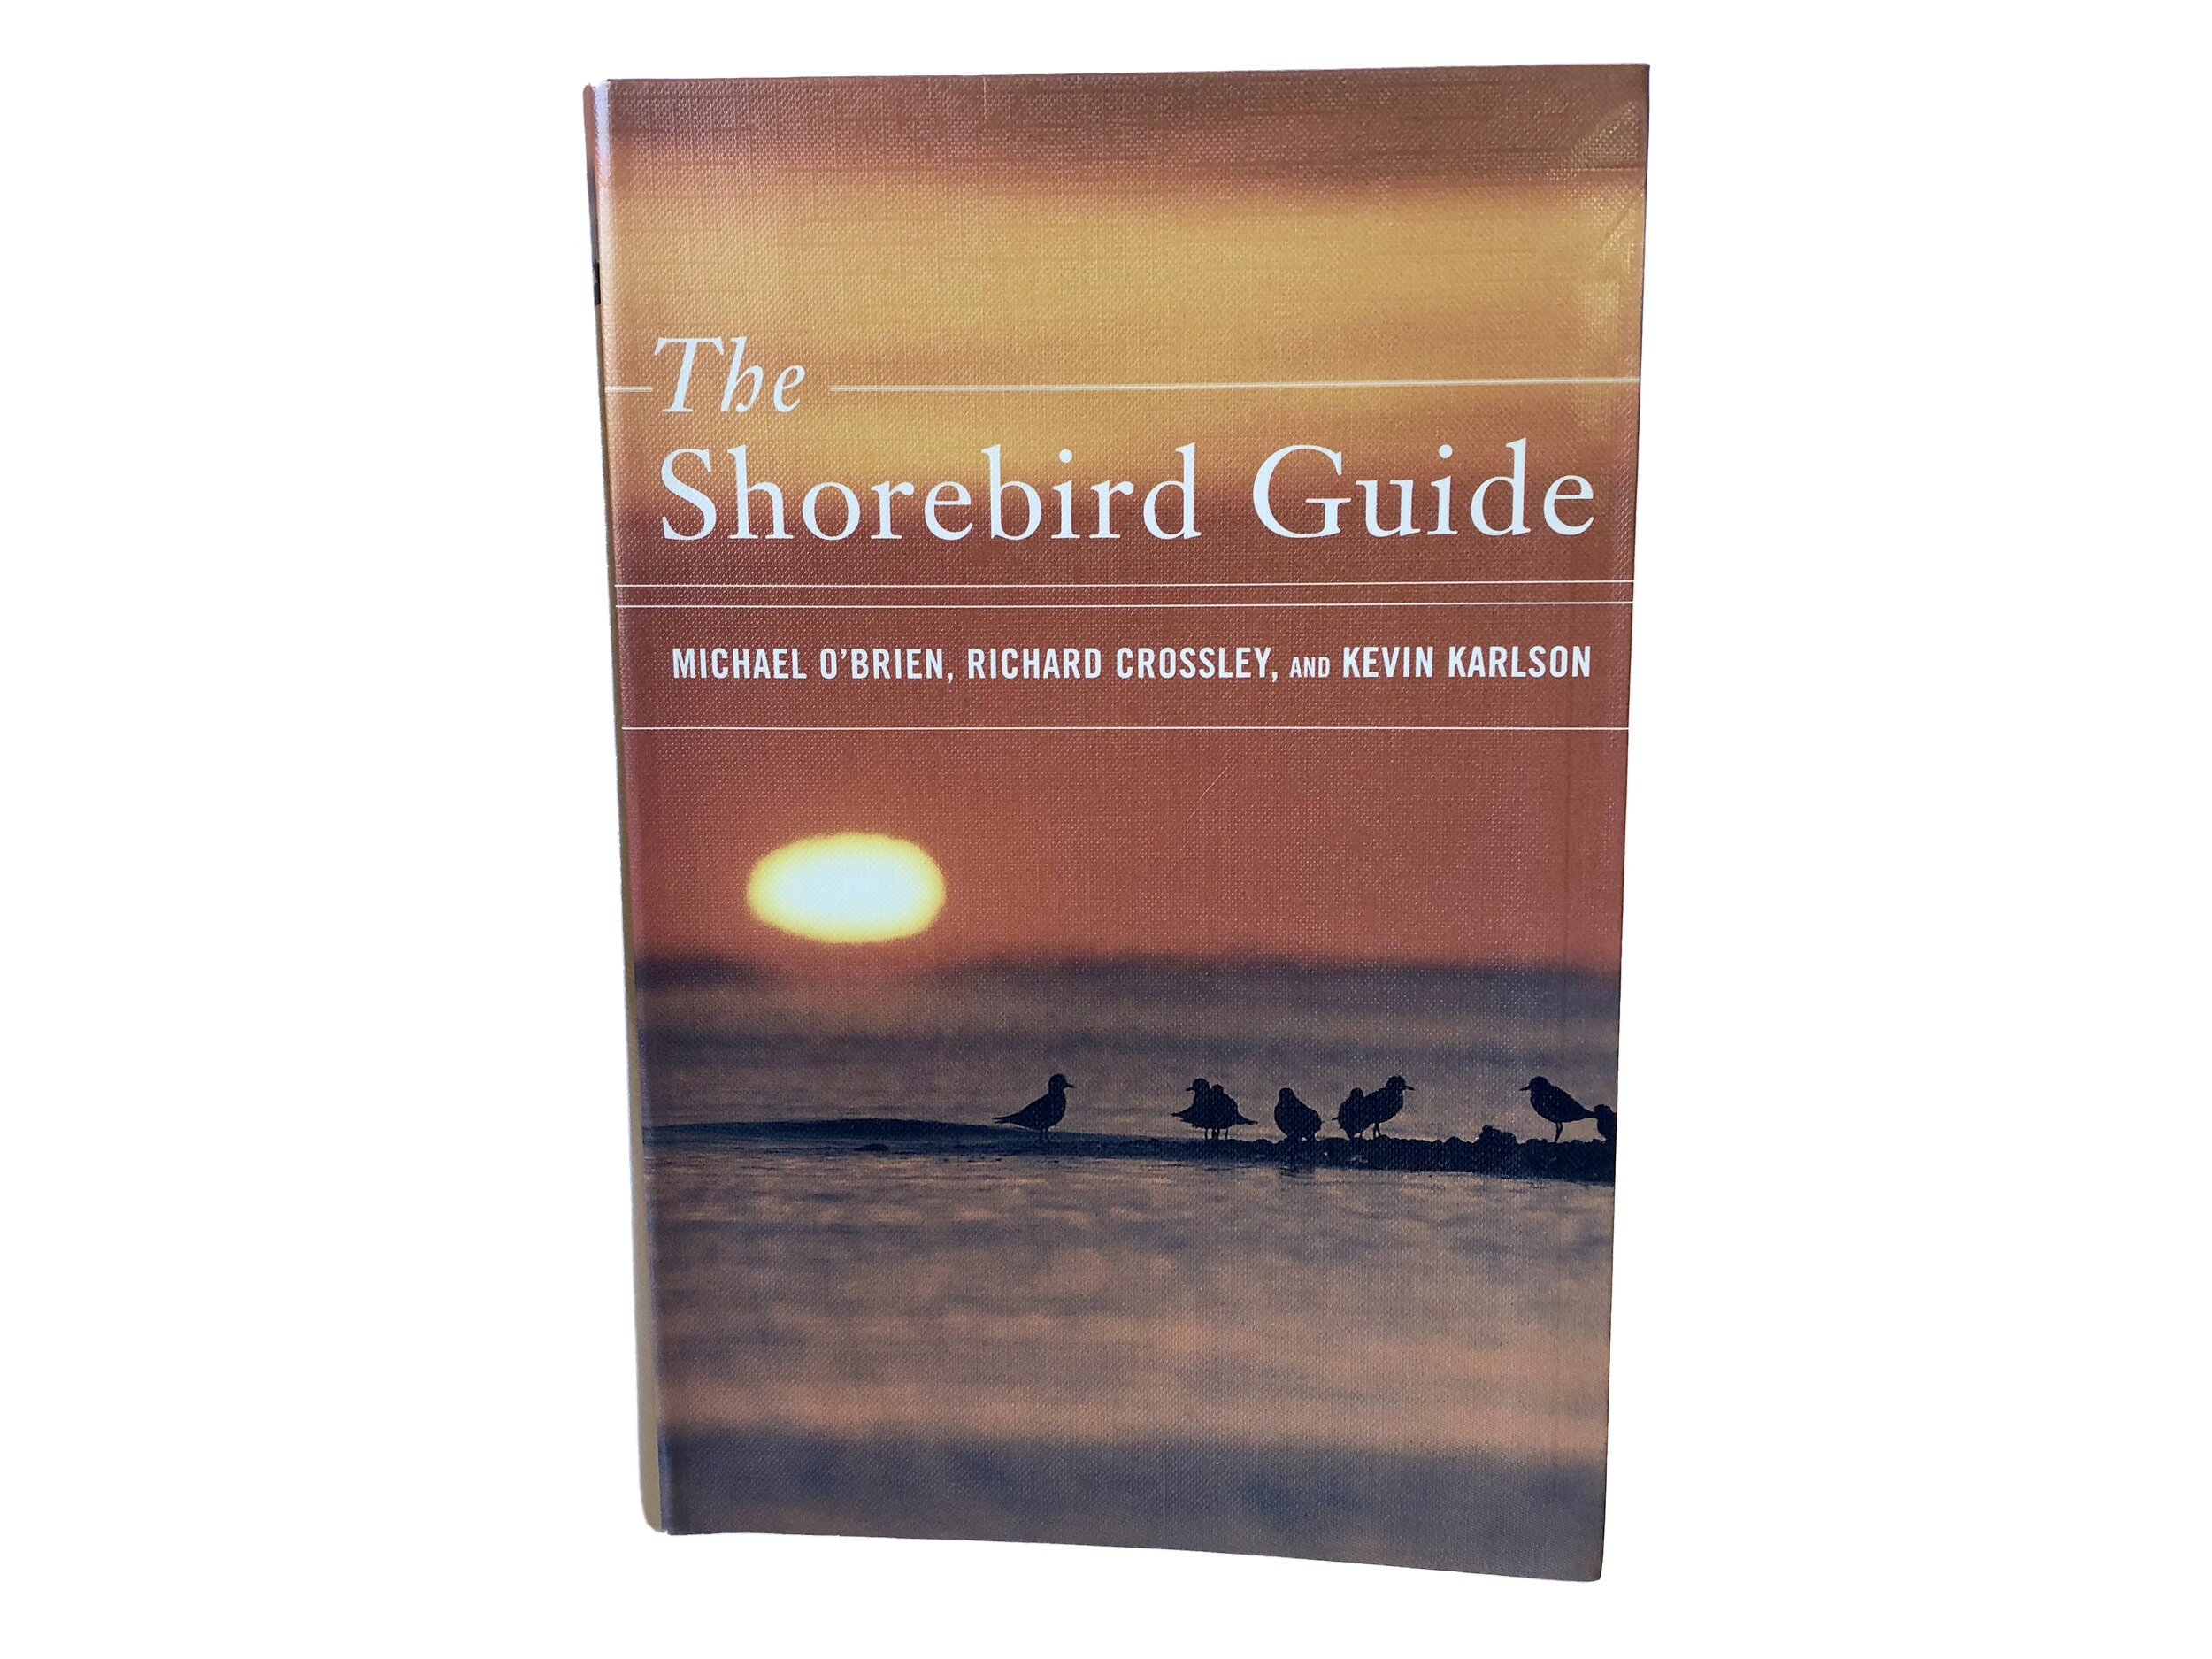 Shorebird Guide - $24.95